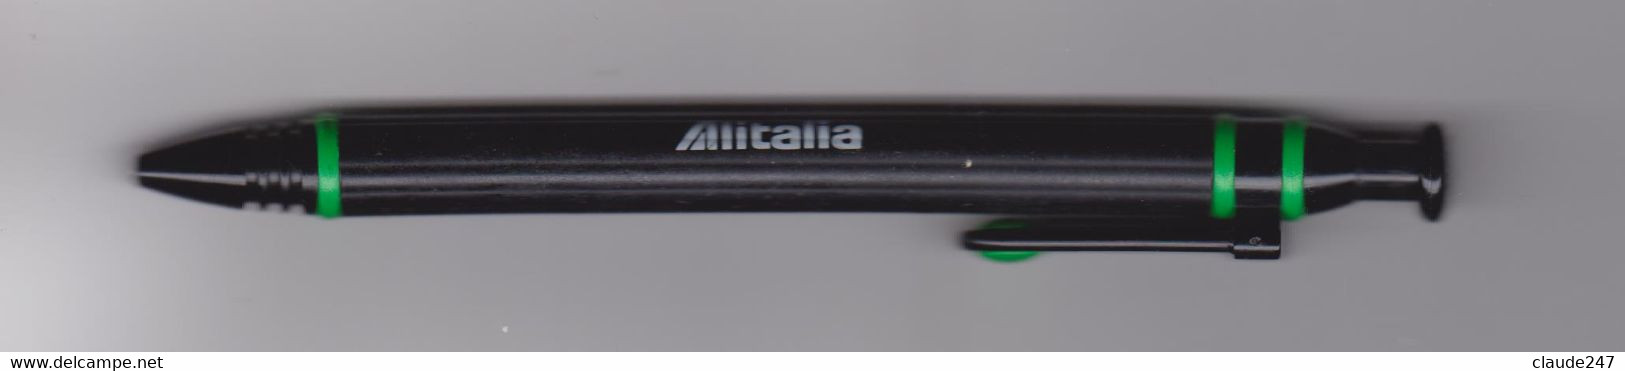 Alitalia Penna Biro Anni 1980/1990 - Cadeaux Promotionnels